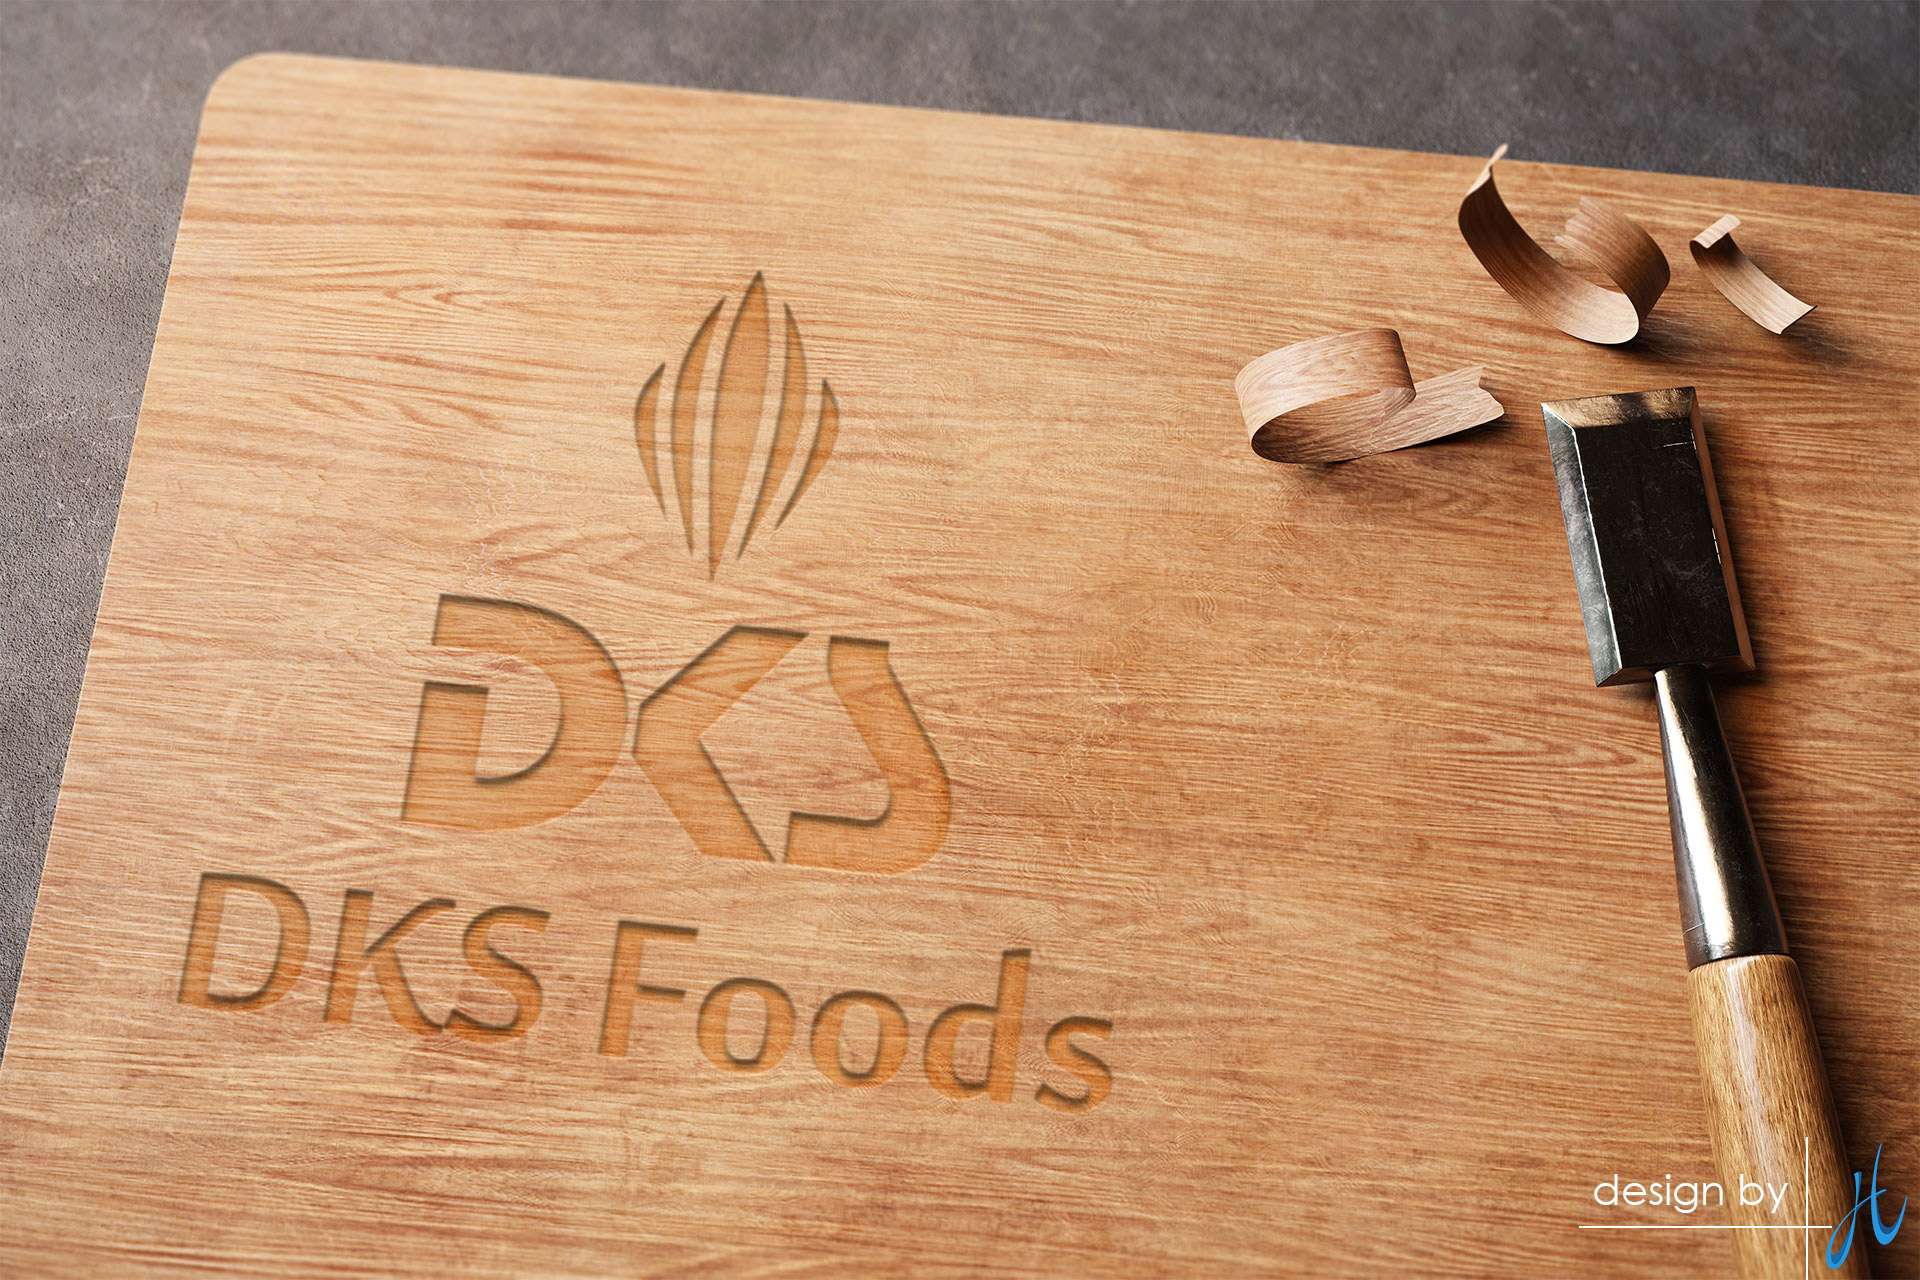 DKS Foods